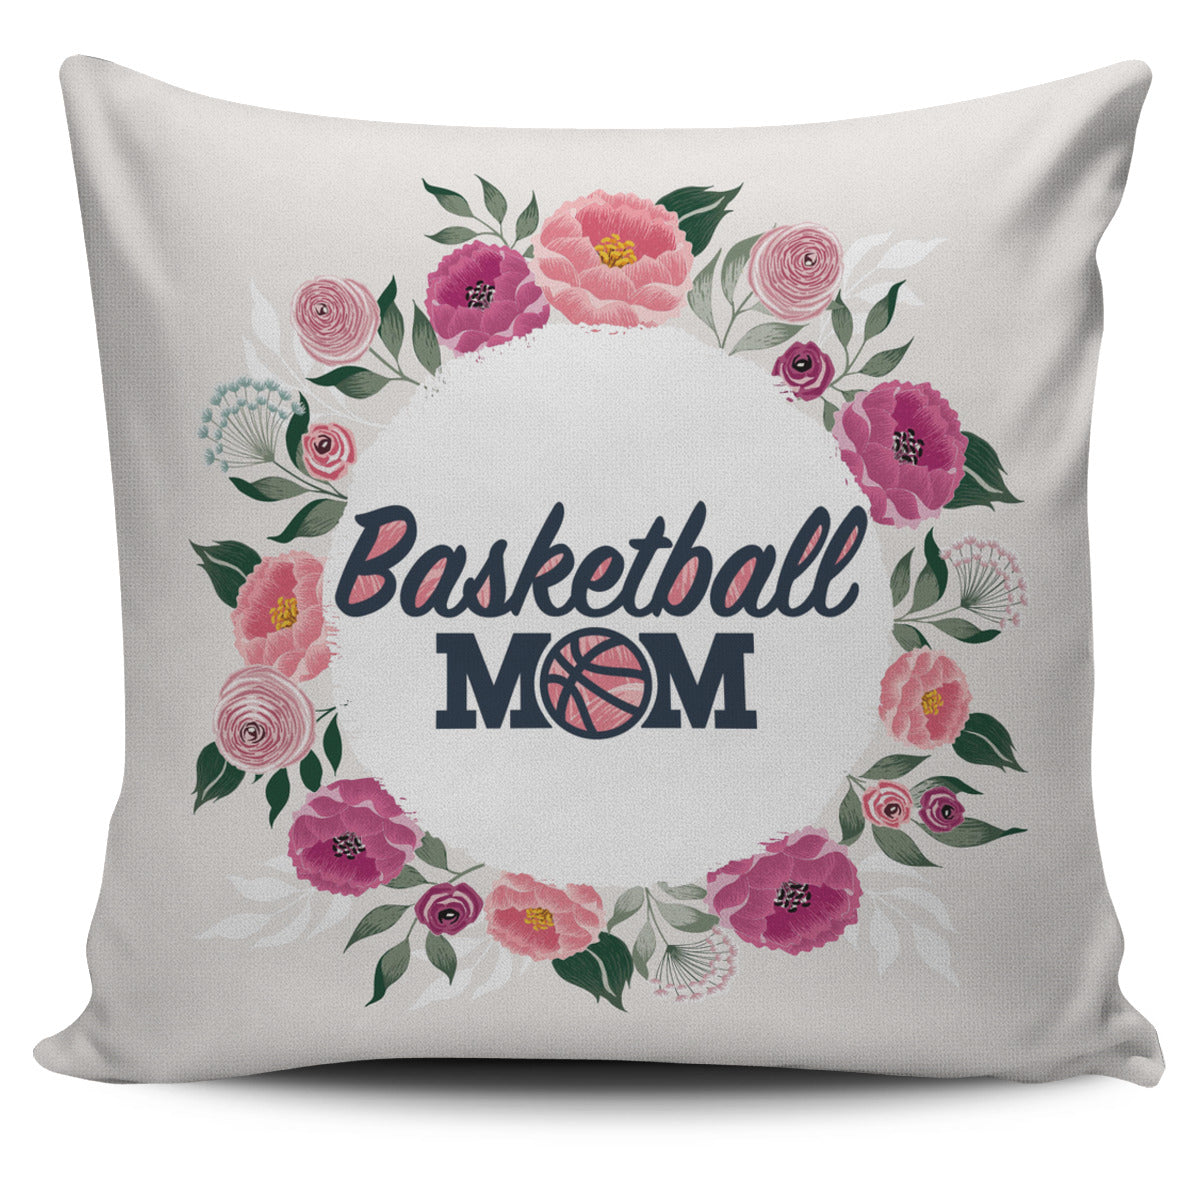 Basketball Mom Pillow Cover